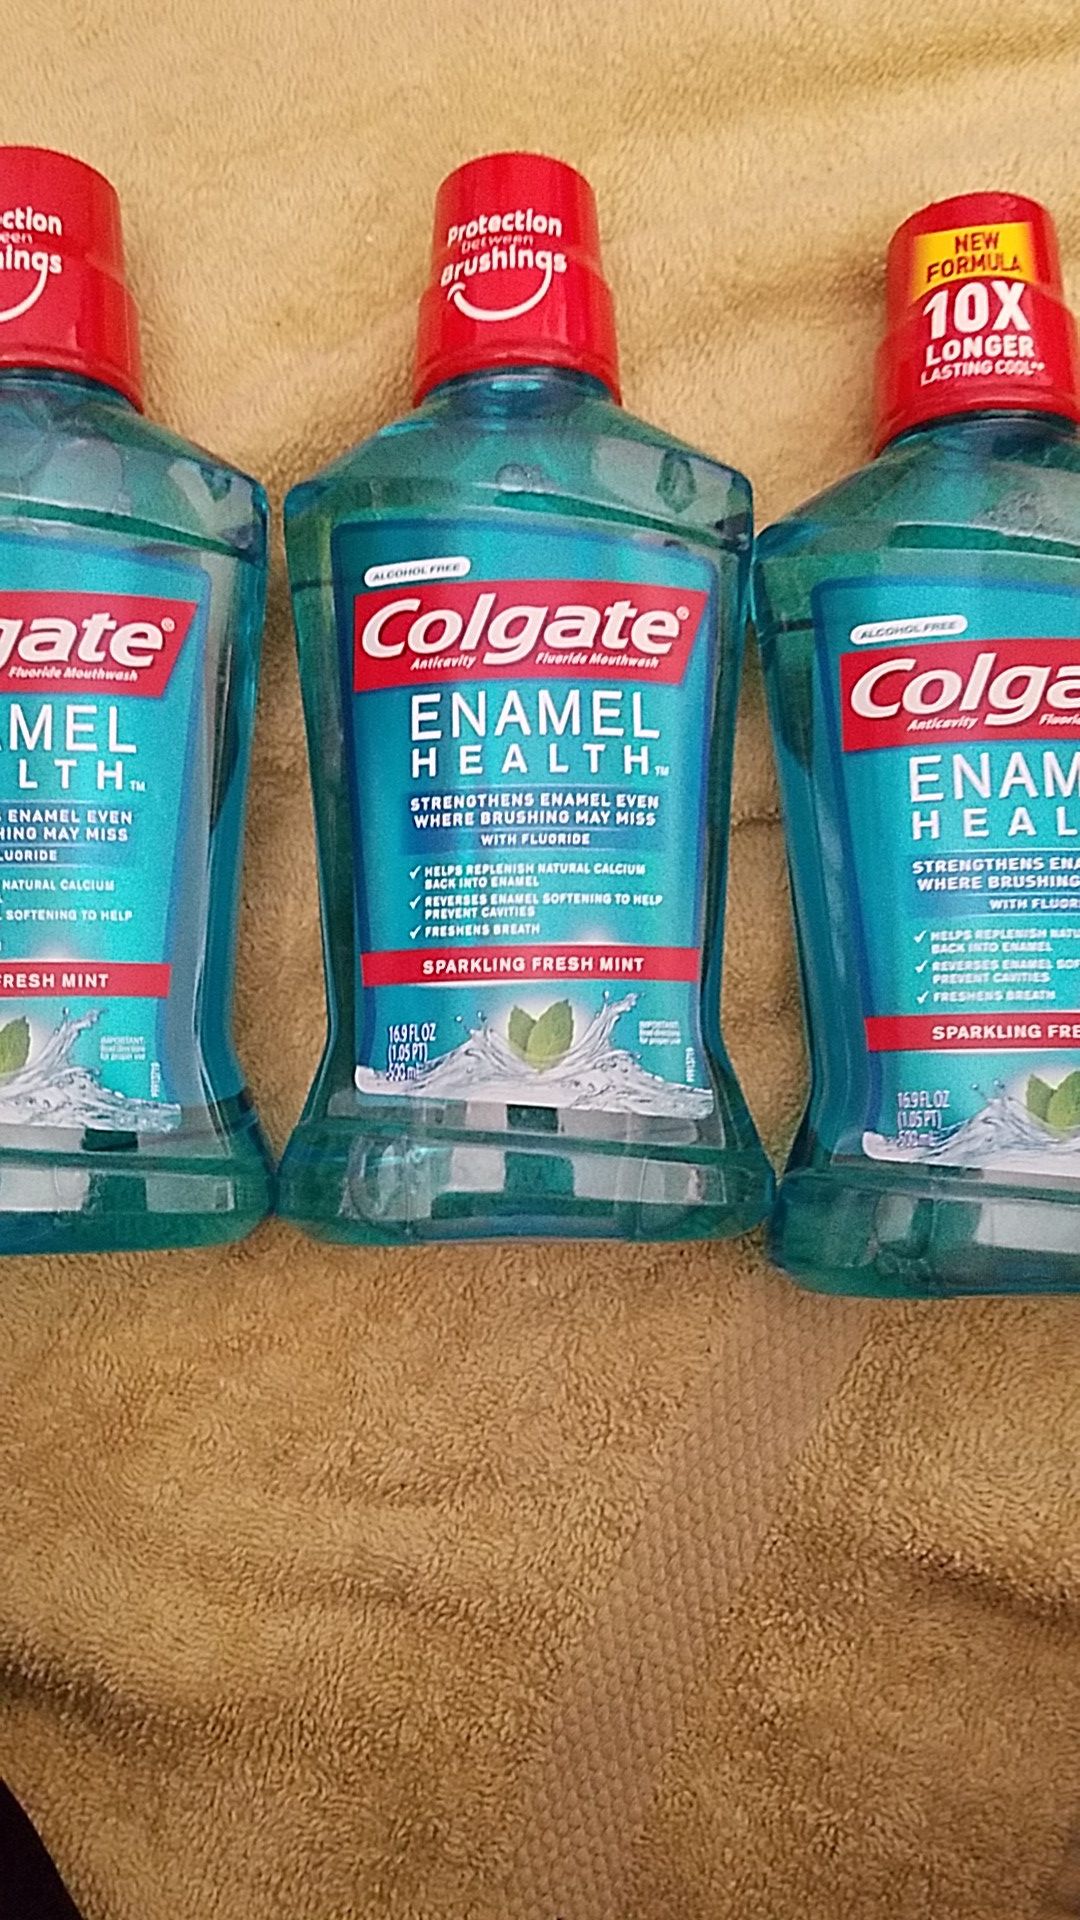 Holgate enamel health mouthwash